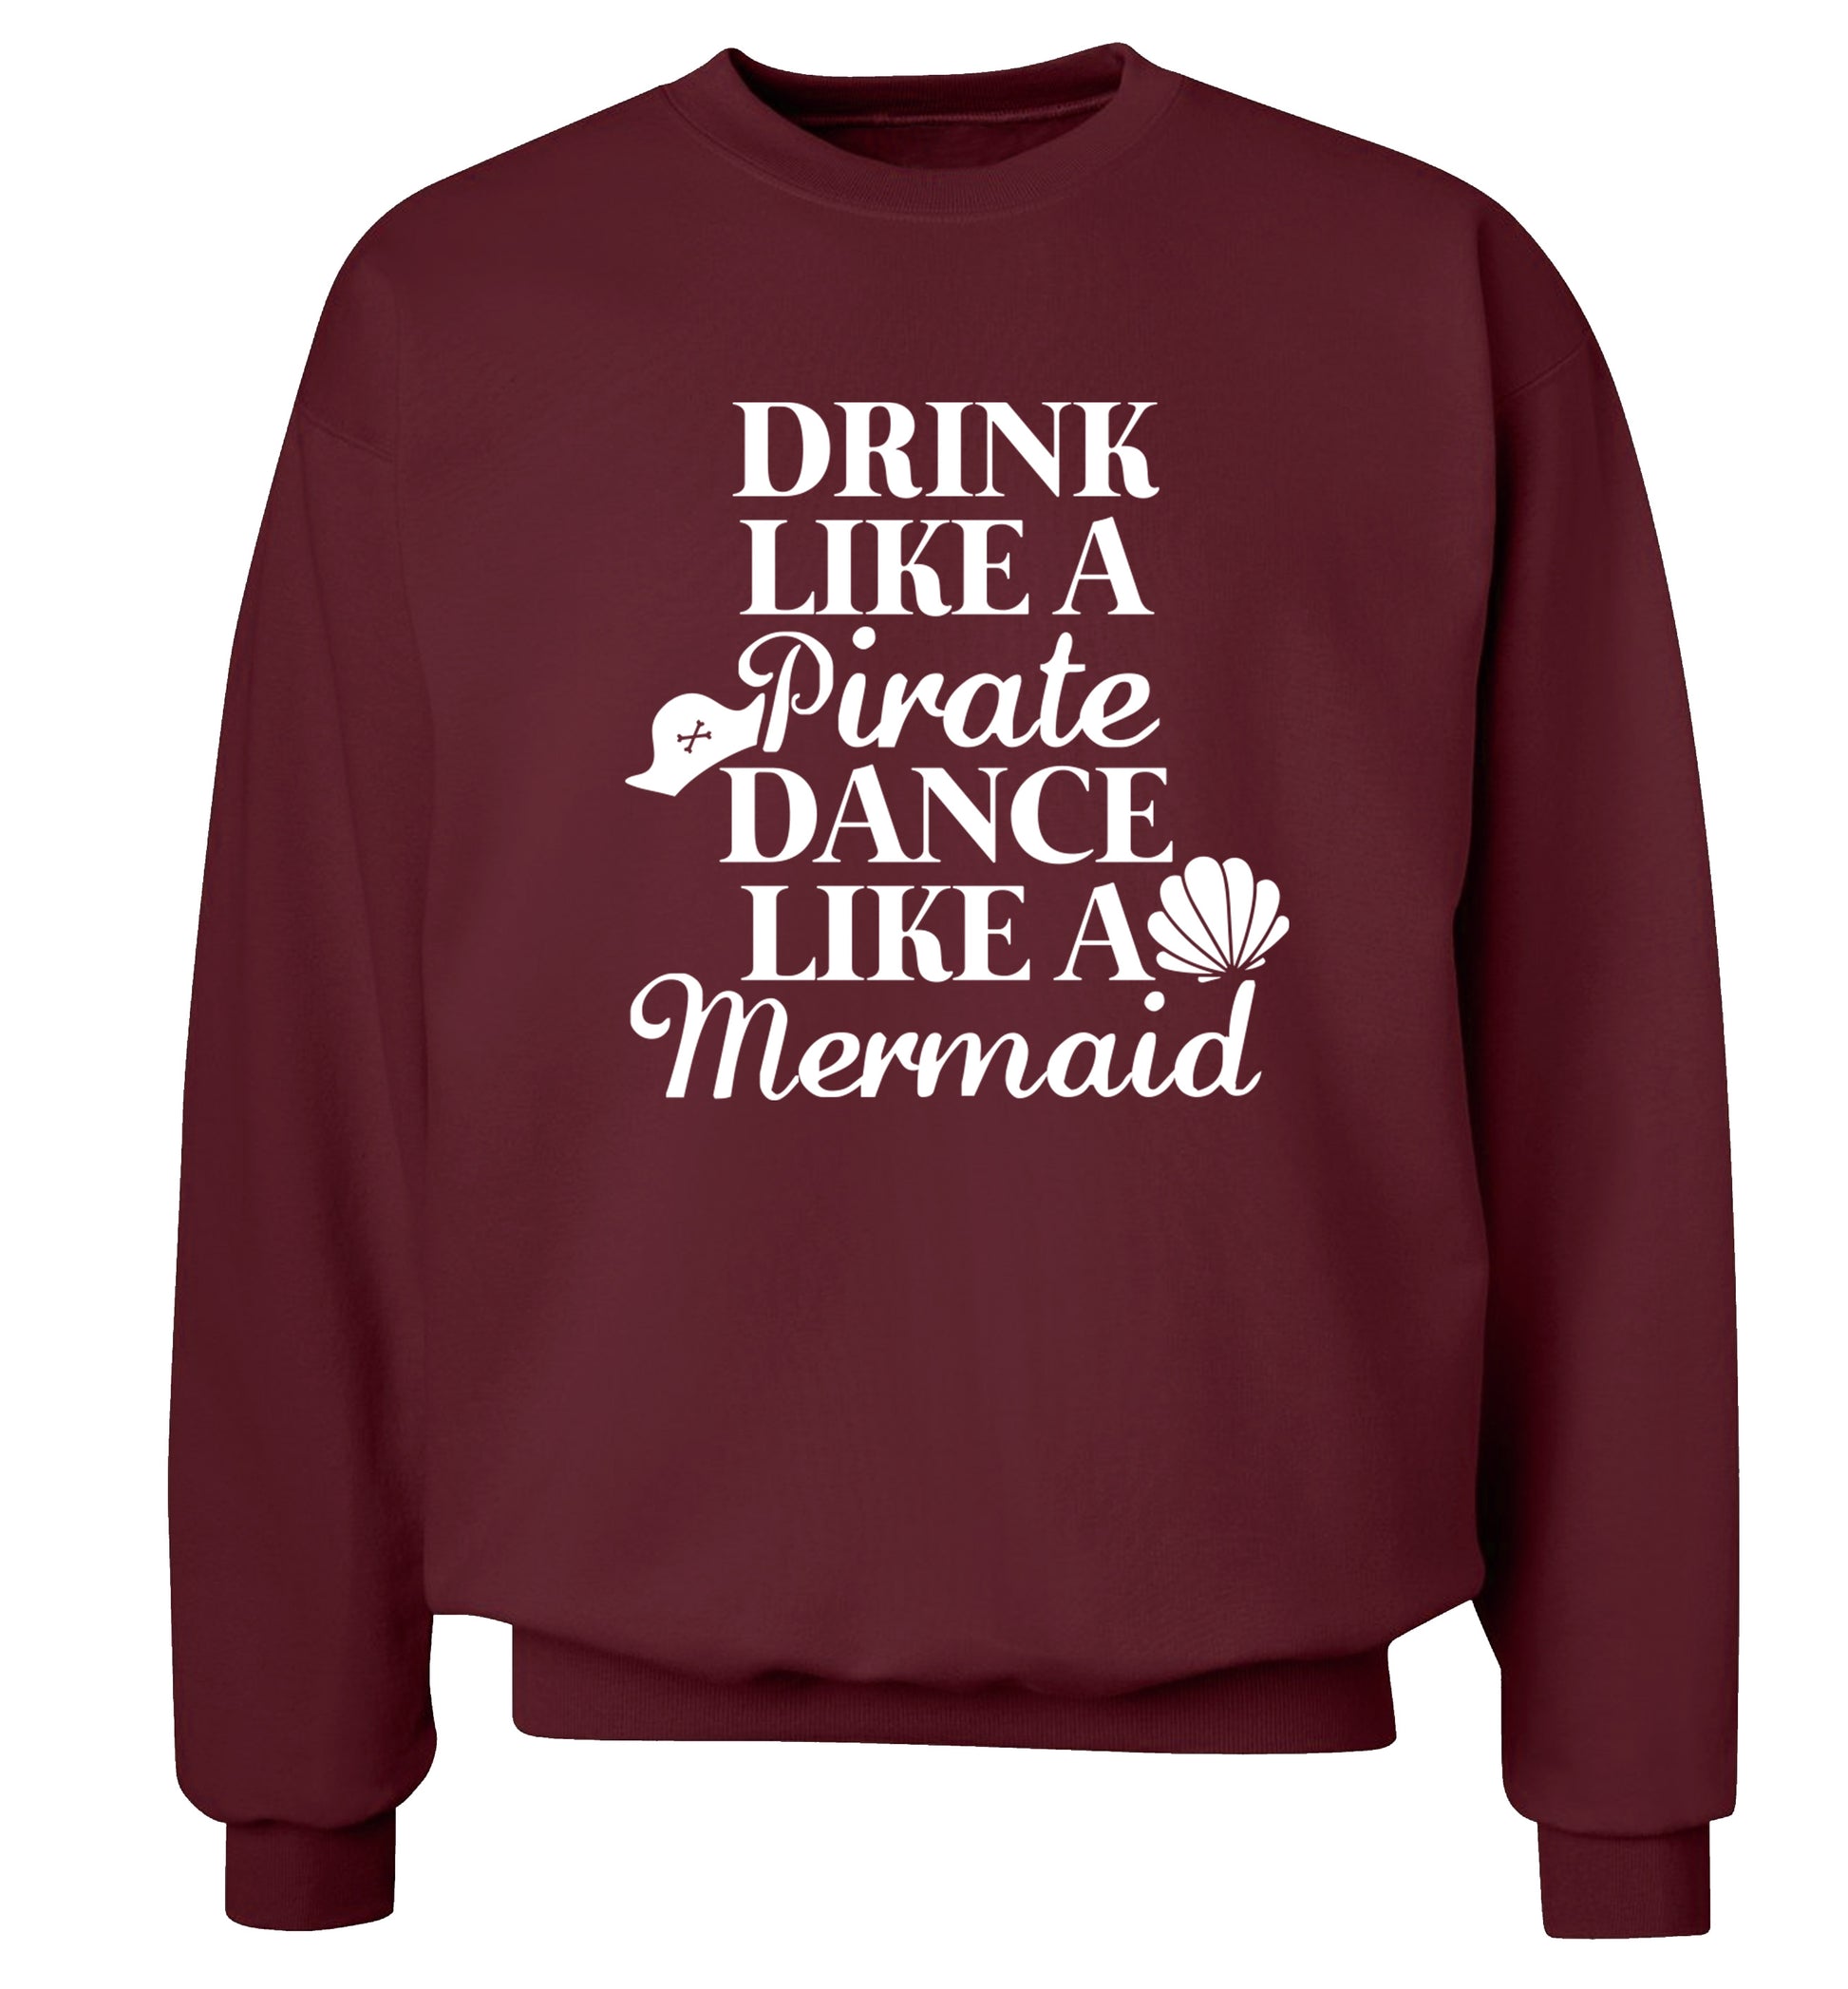 Drink like a pirate dance like a mermaid Adult's unisex maroon Sweater 2XL